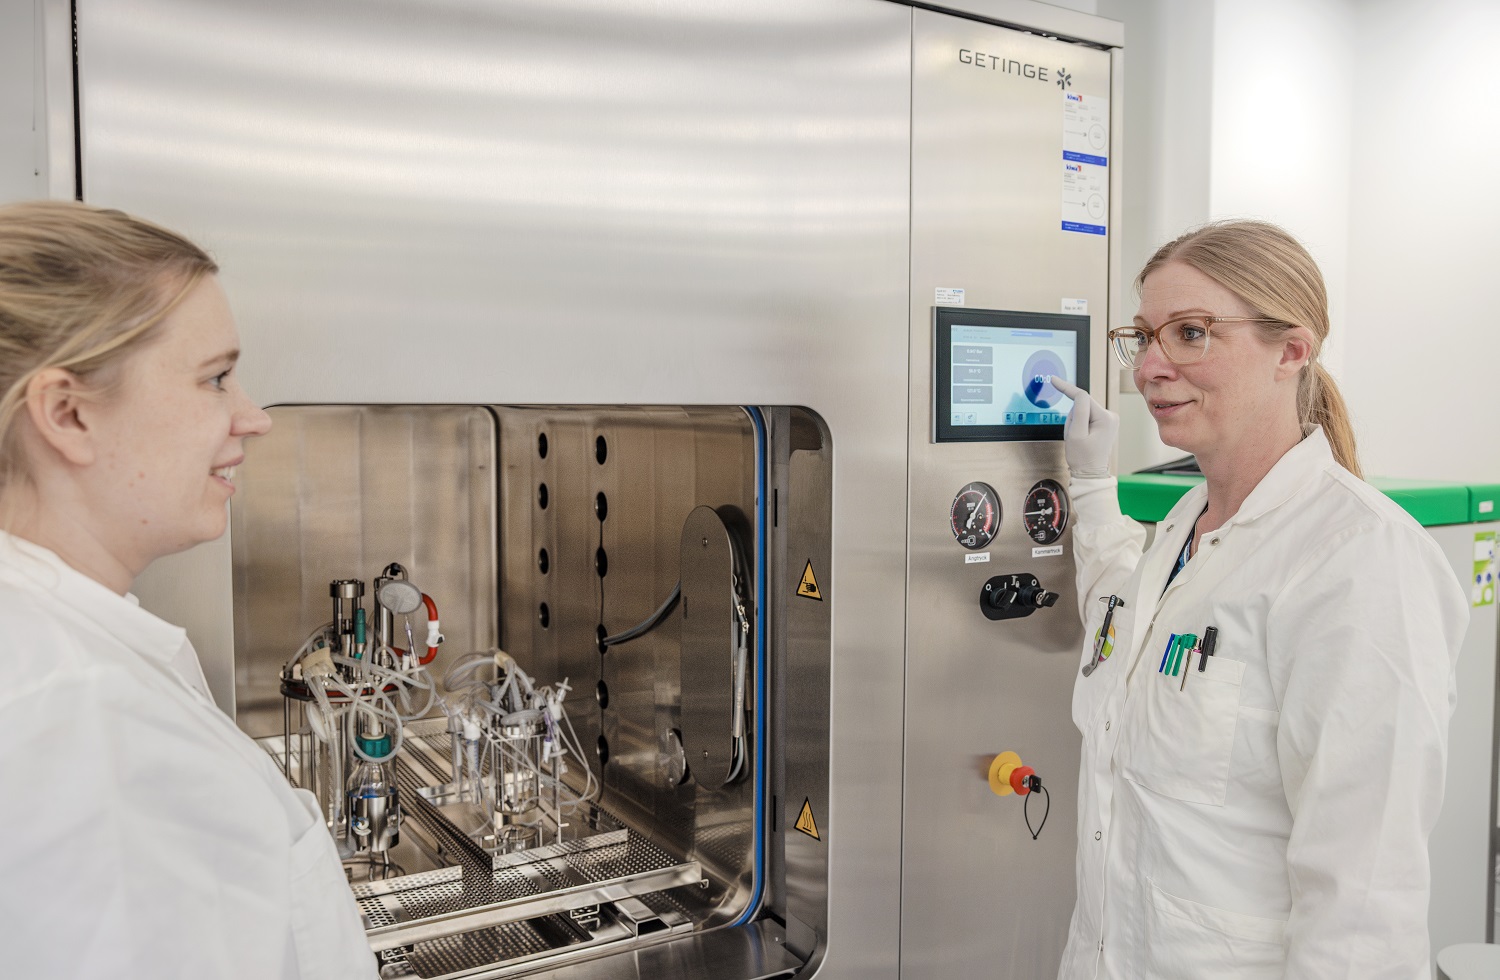 Multi-use Applikon bioreactor in a Getinge sterilizer